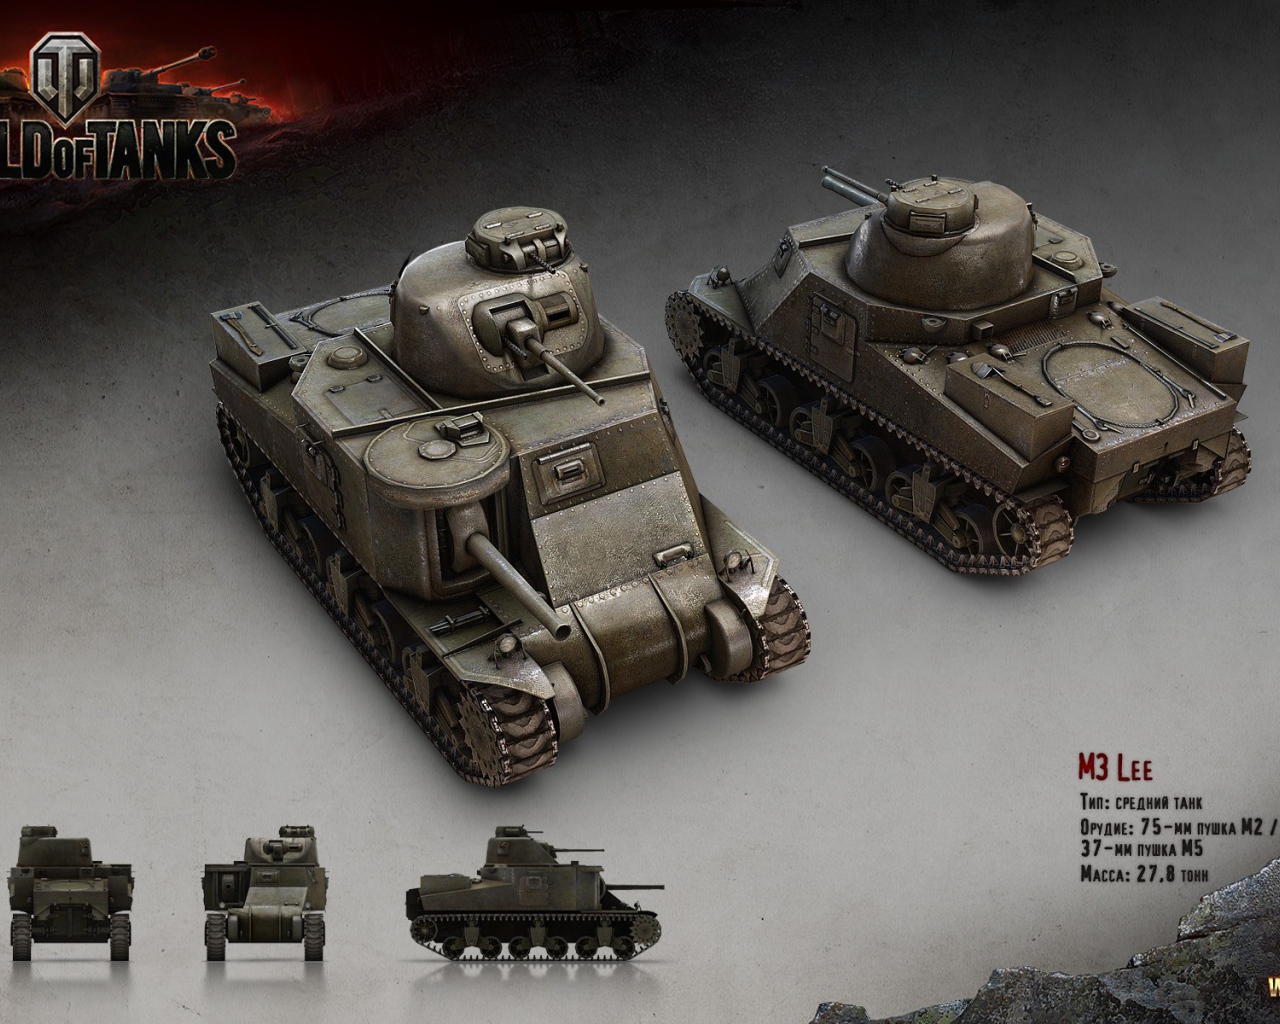 Medium Tank M-3 Lee, the game World of Tanks